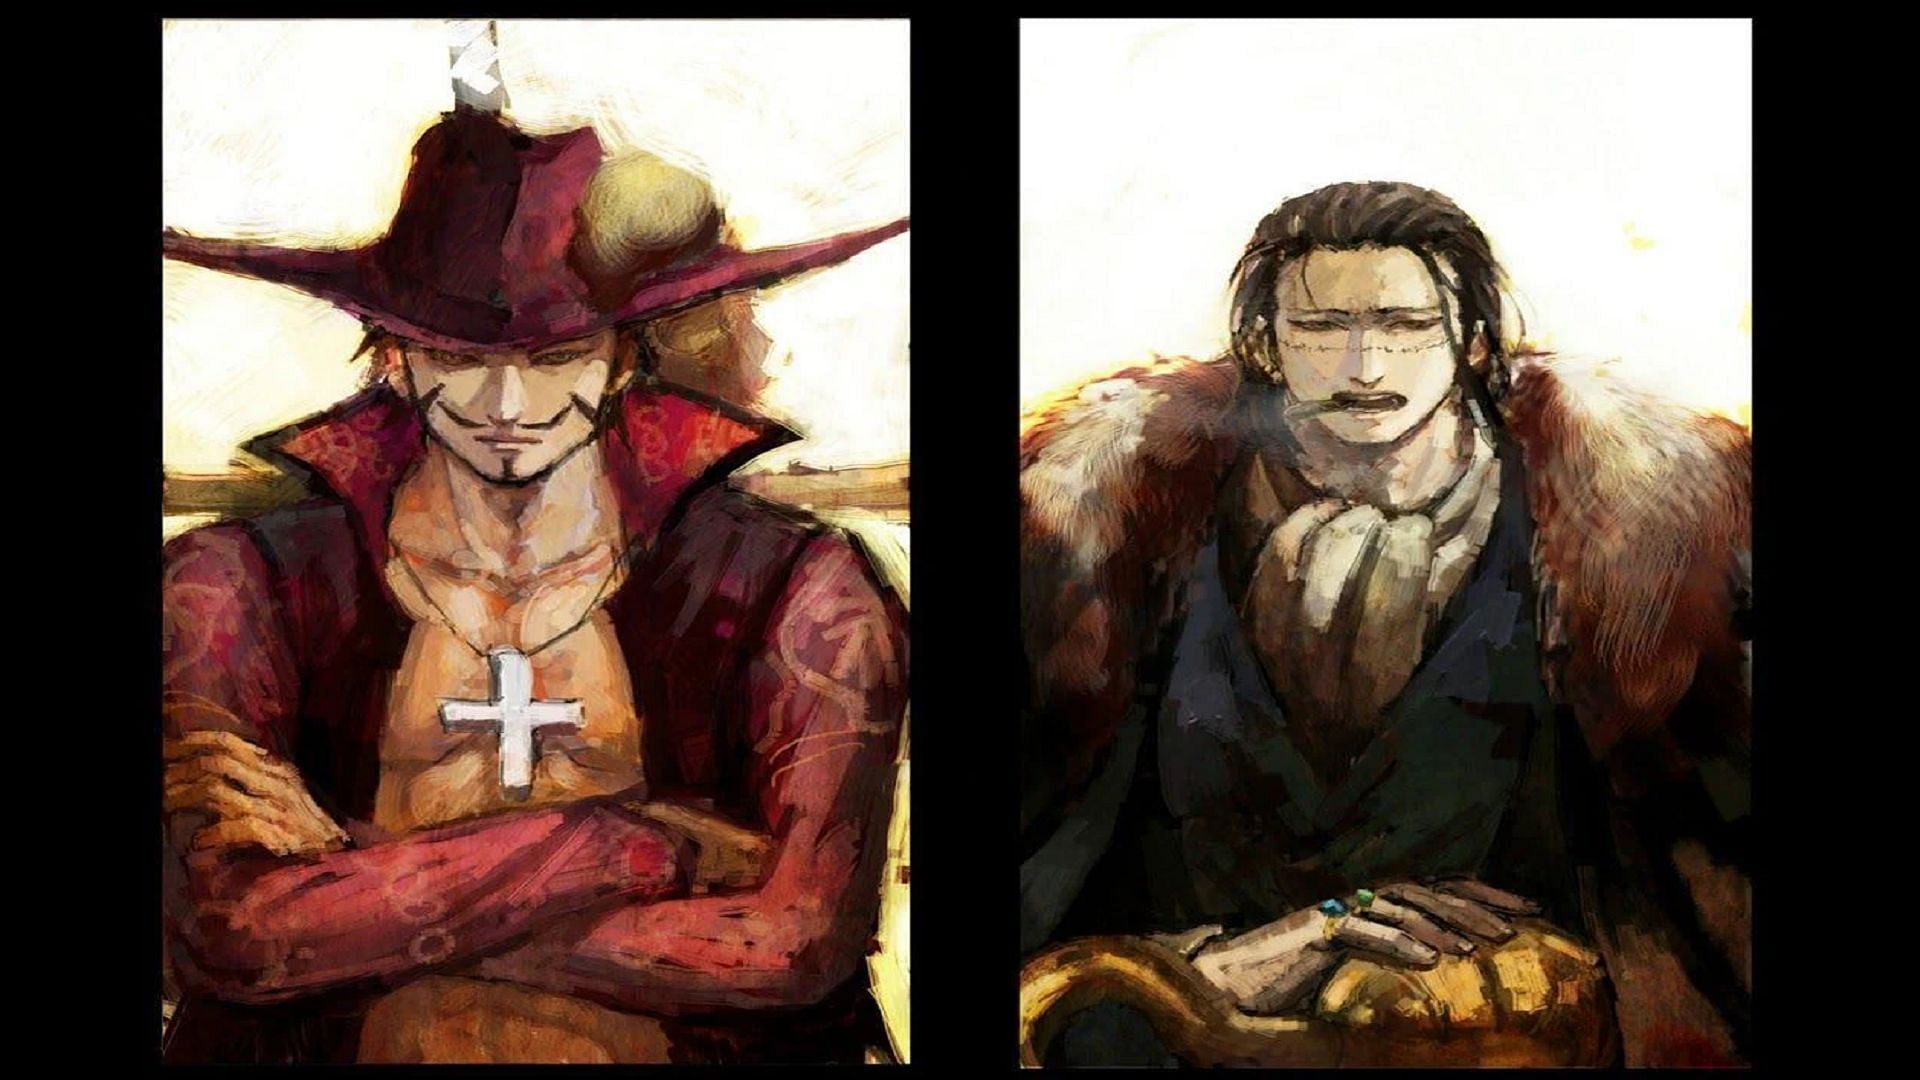 Two former members of the Seven Warlords, Mihawk and Crocodile founded Cross Guild, a new organization (Image via Eiichiro Oda/Shueisha, One Piece)